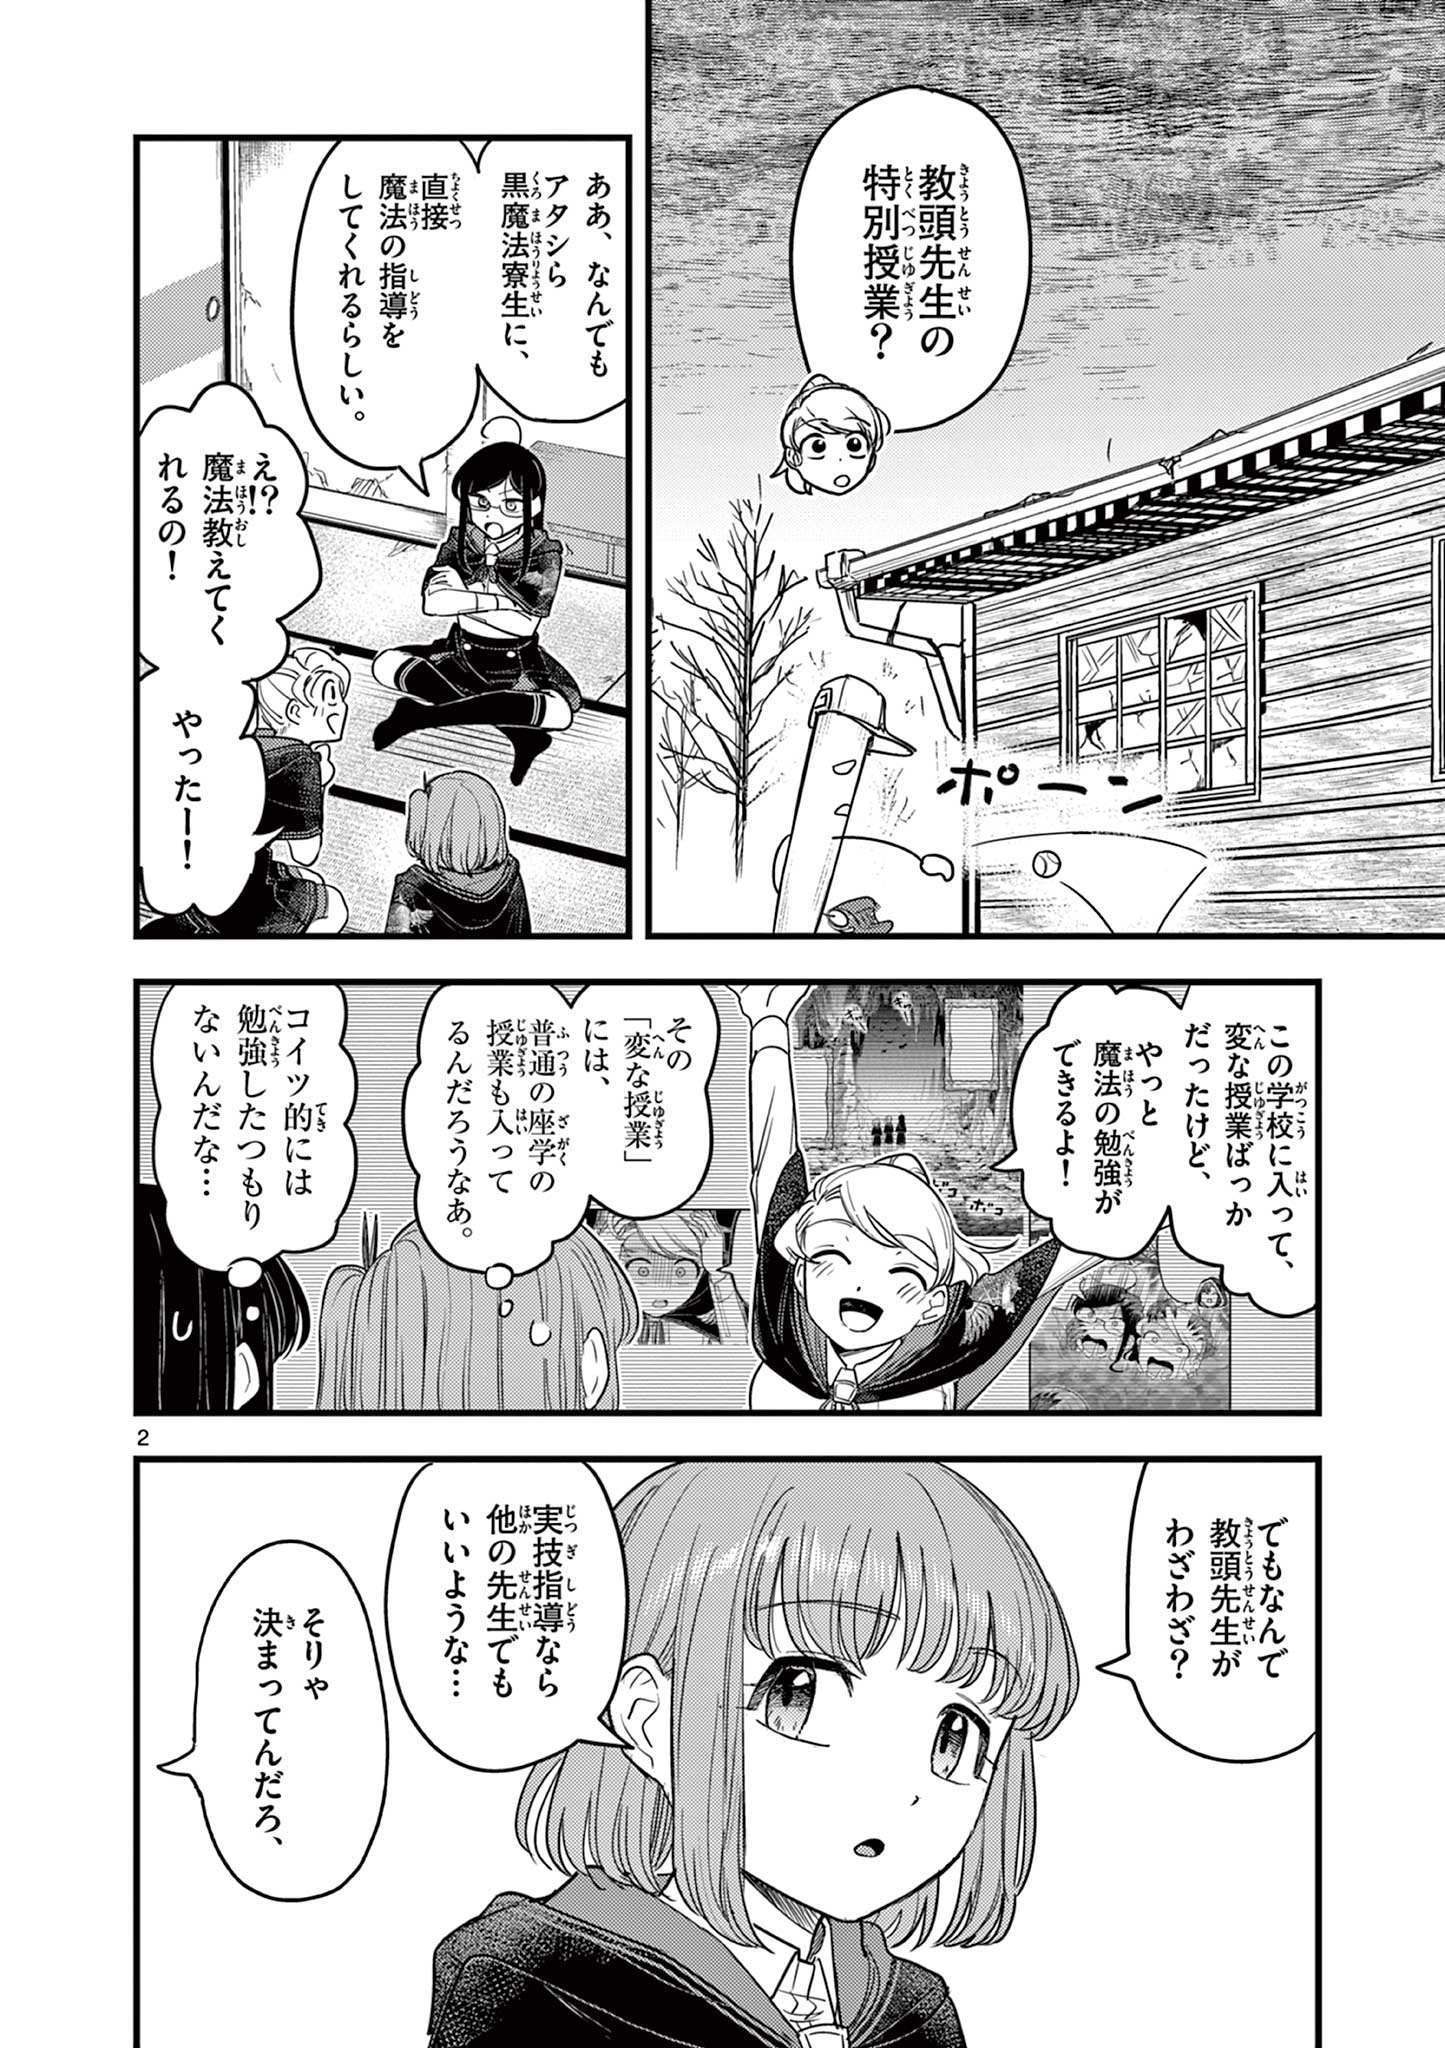 Kuro Mahou Ryou no Sanakunin - Chapter 7 - Page 2